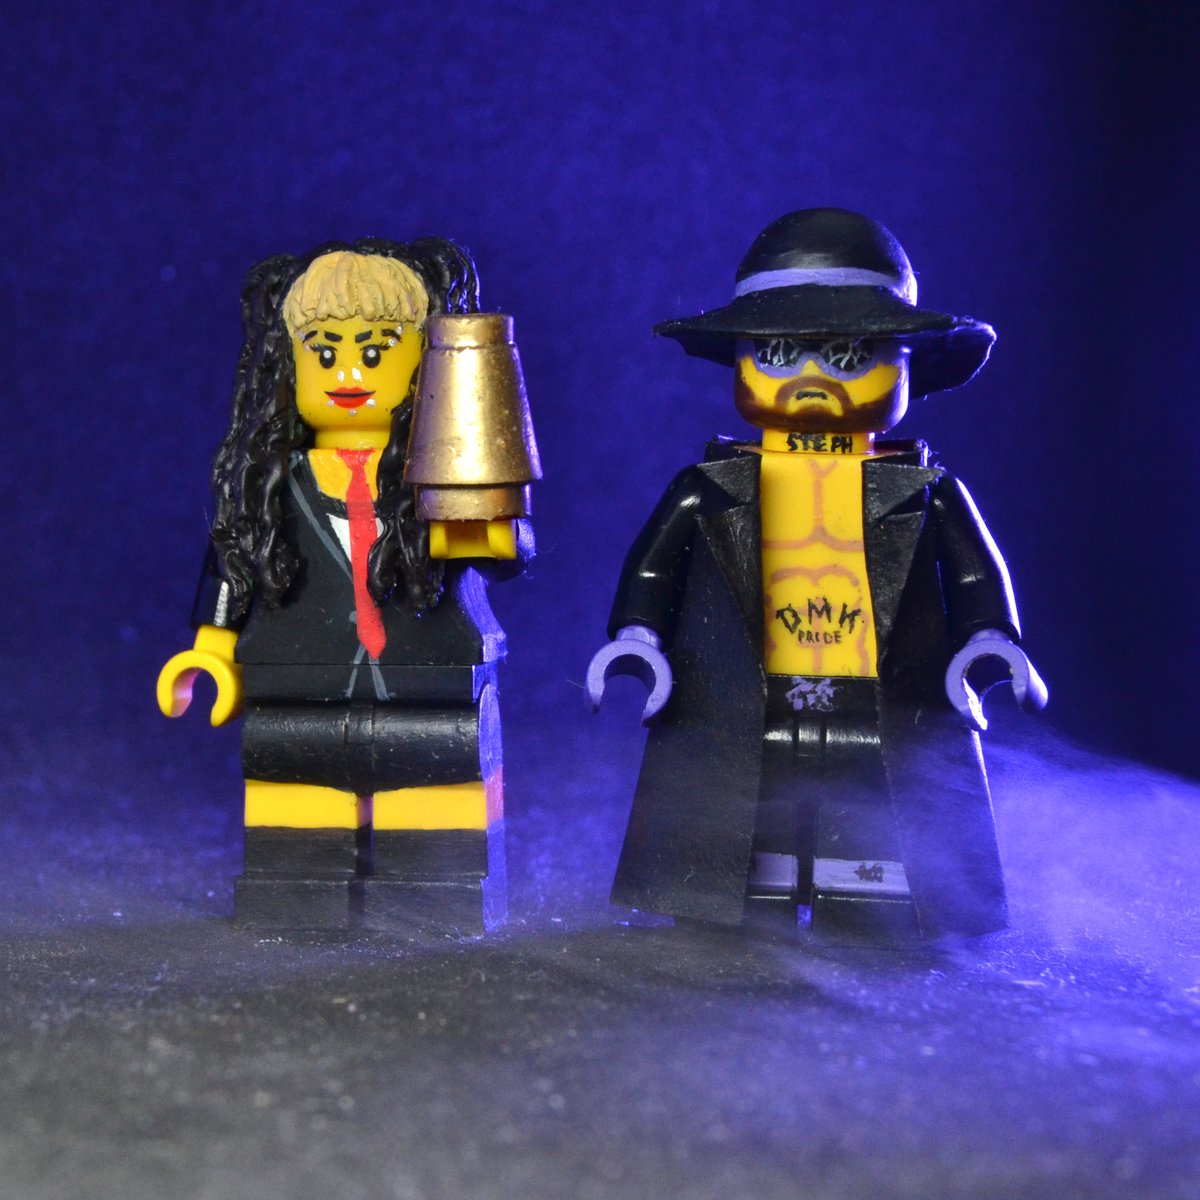 Custom #Lego Rydertaker and custom #Lego Paula Bearer 😊
#MattCardona #StephDeLander #GCW